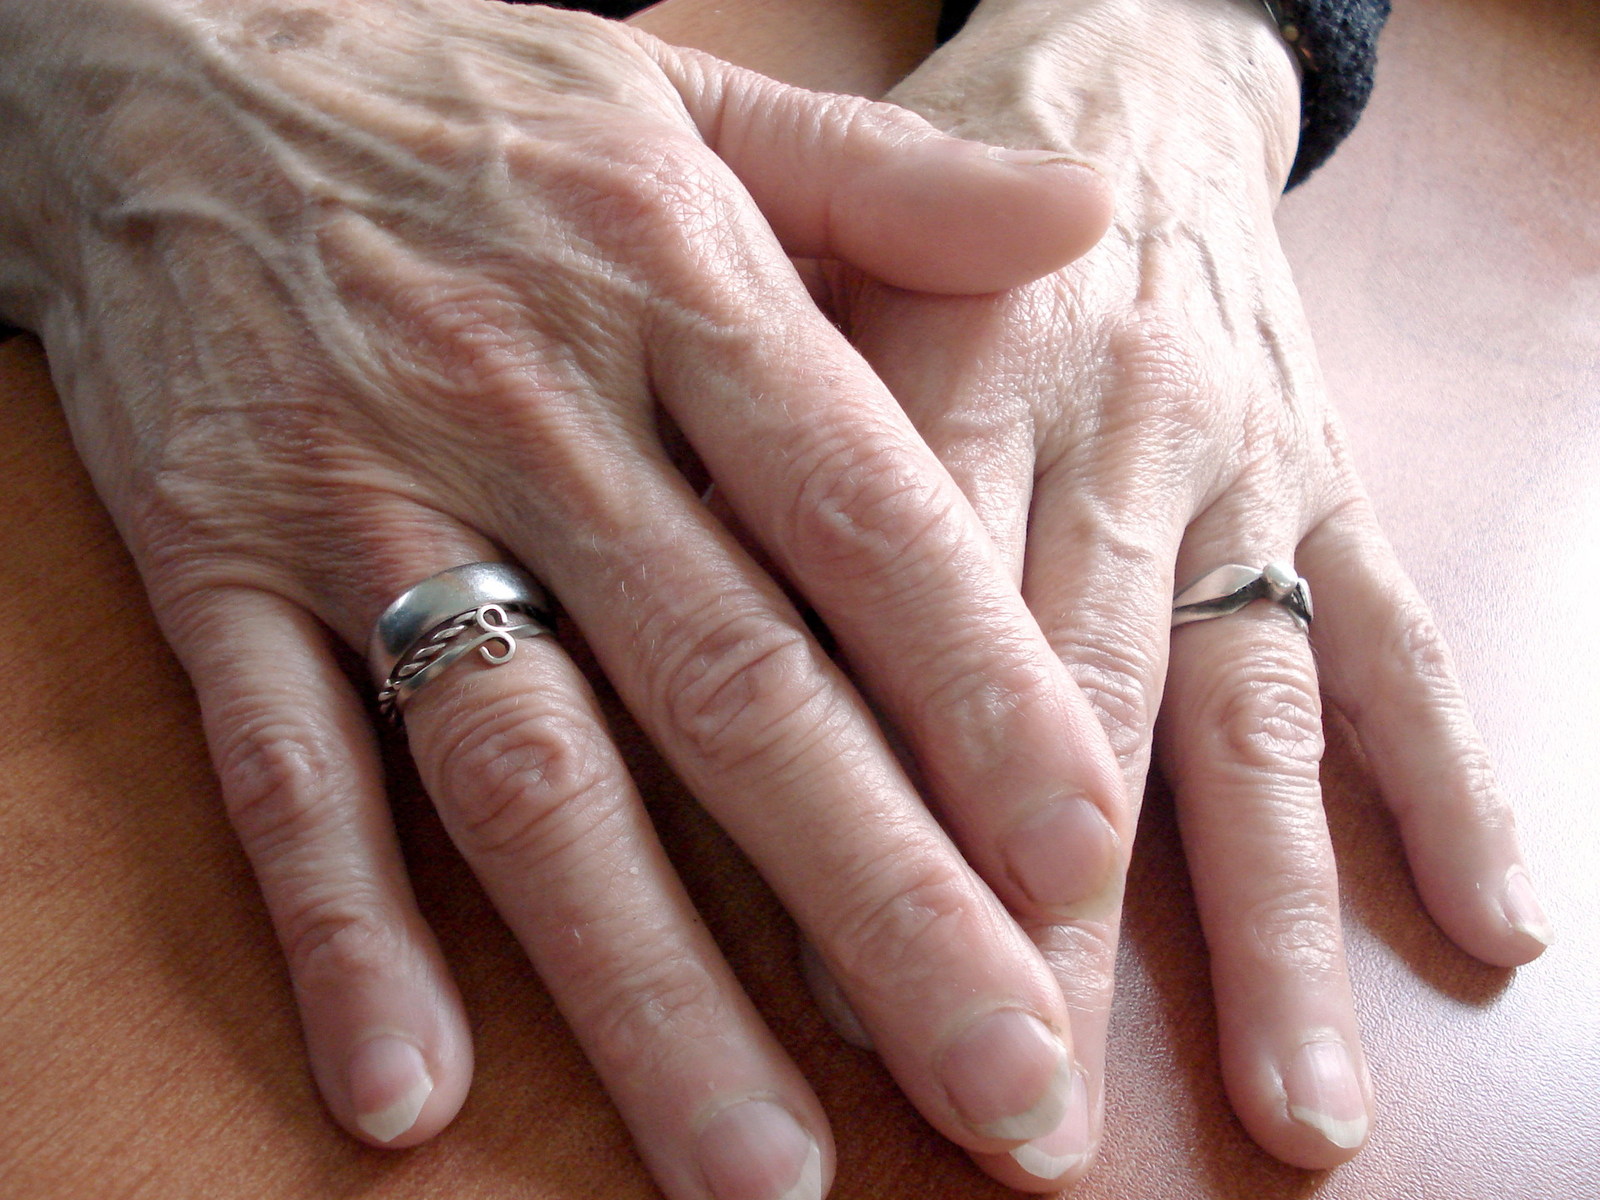 Barbara L. and Rheumatoid Arthritis – Reader Story